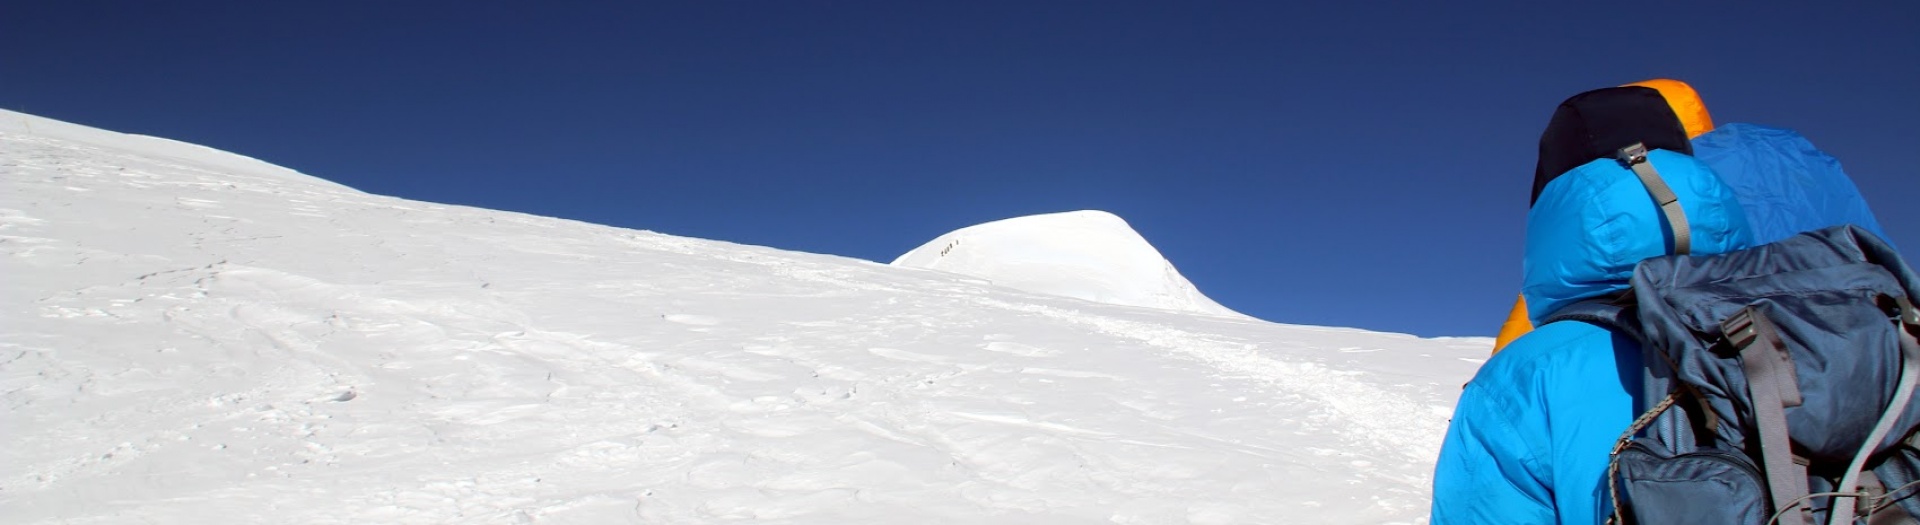 Ascension Mera Peak